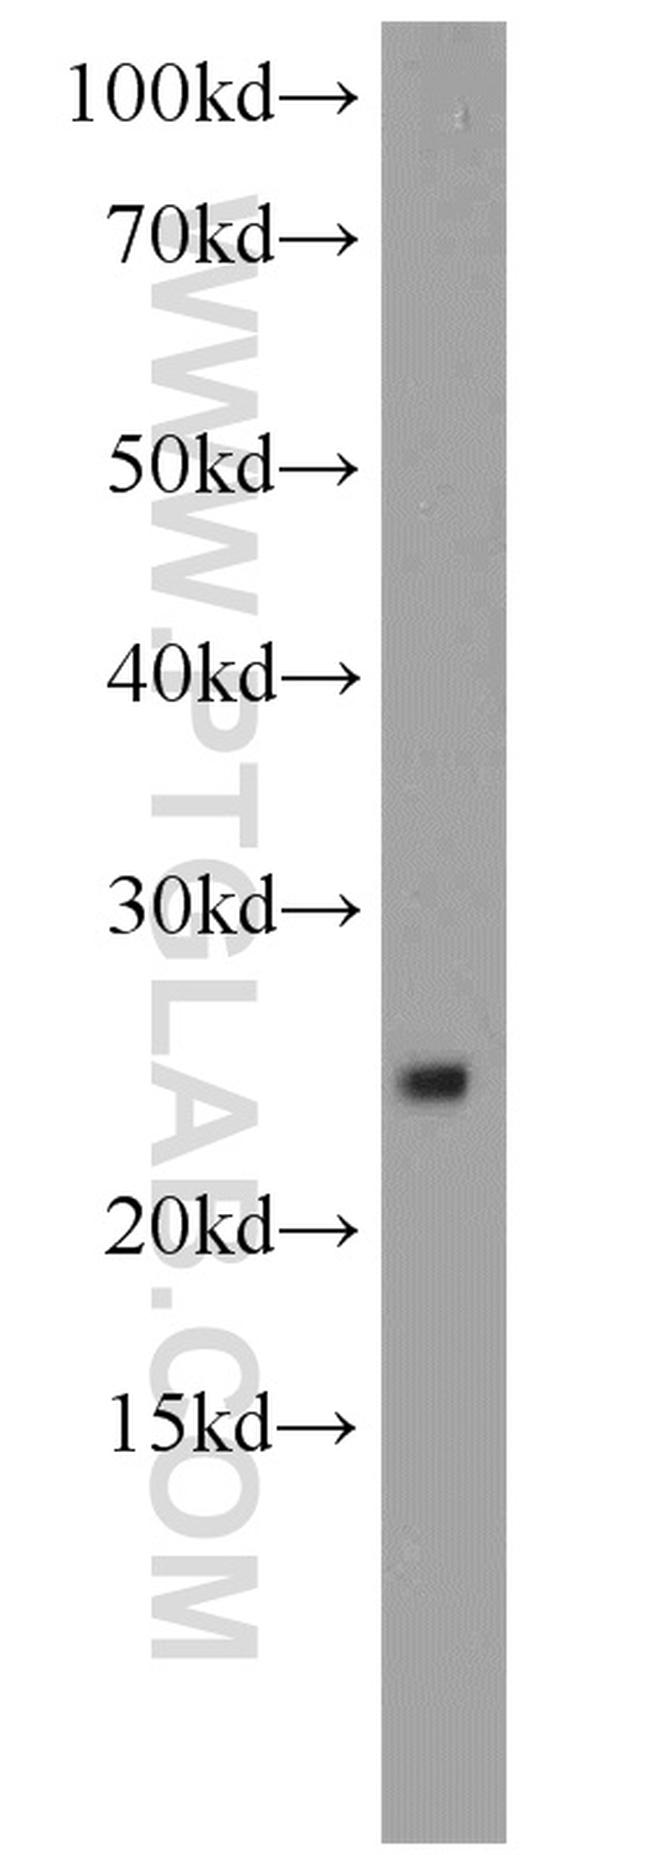 RPS9 Antibody in Western Blot (WB)